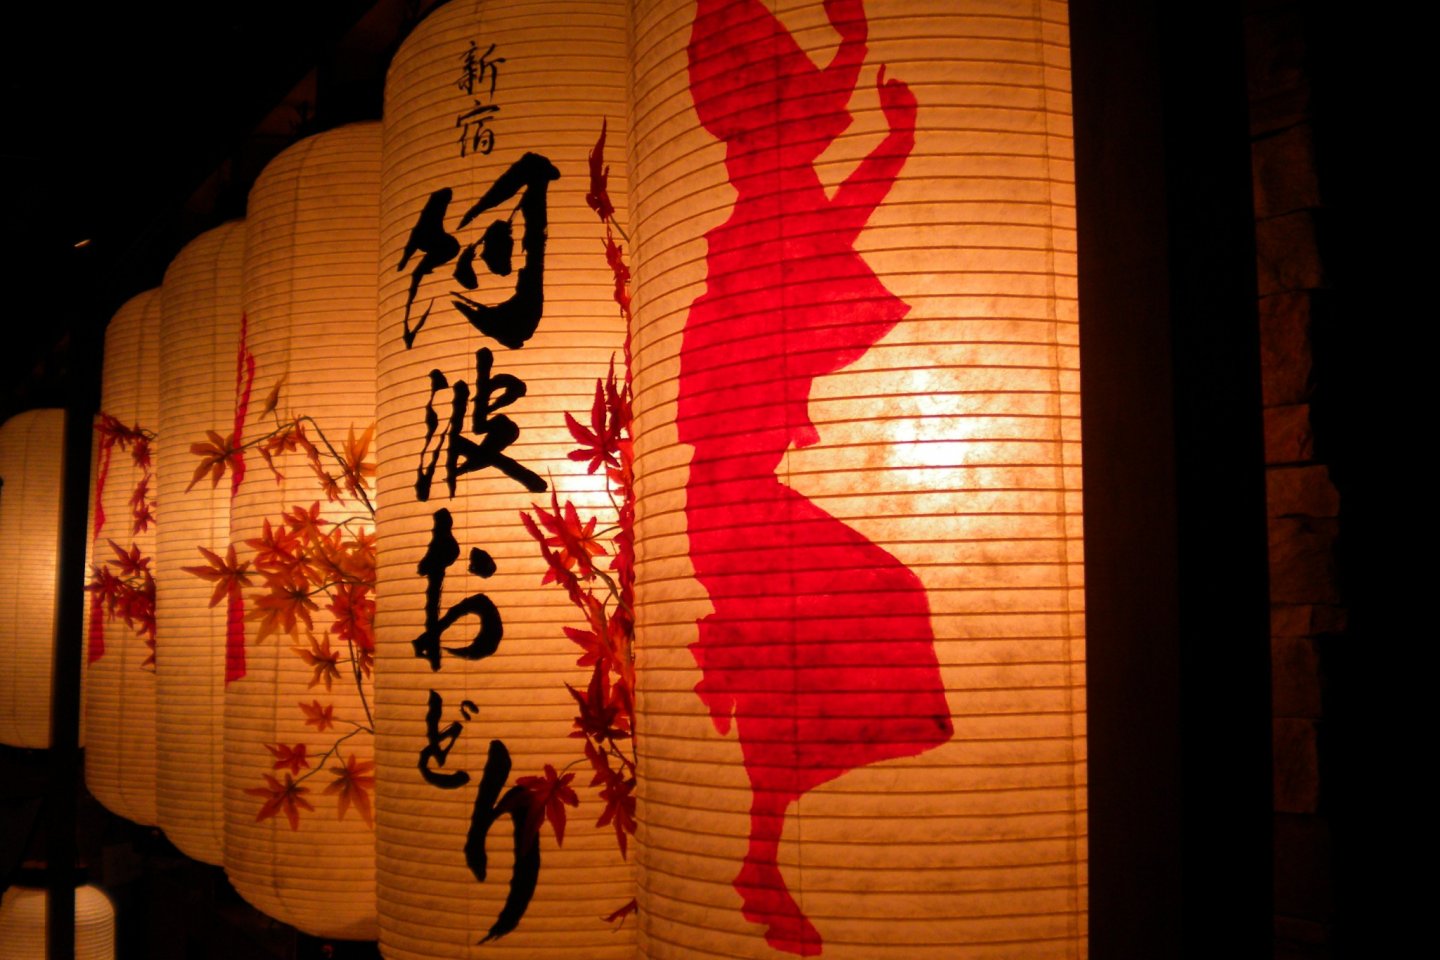 Festival lanterns set the mood.